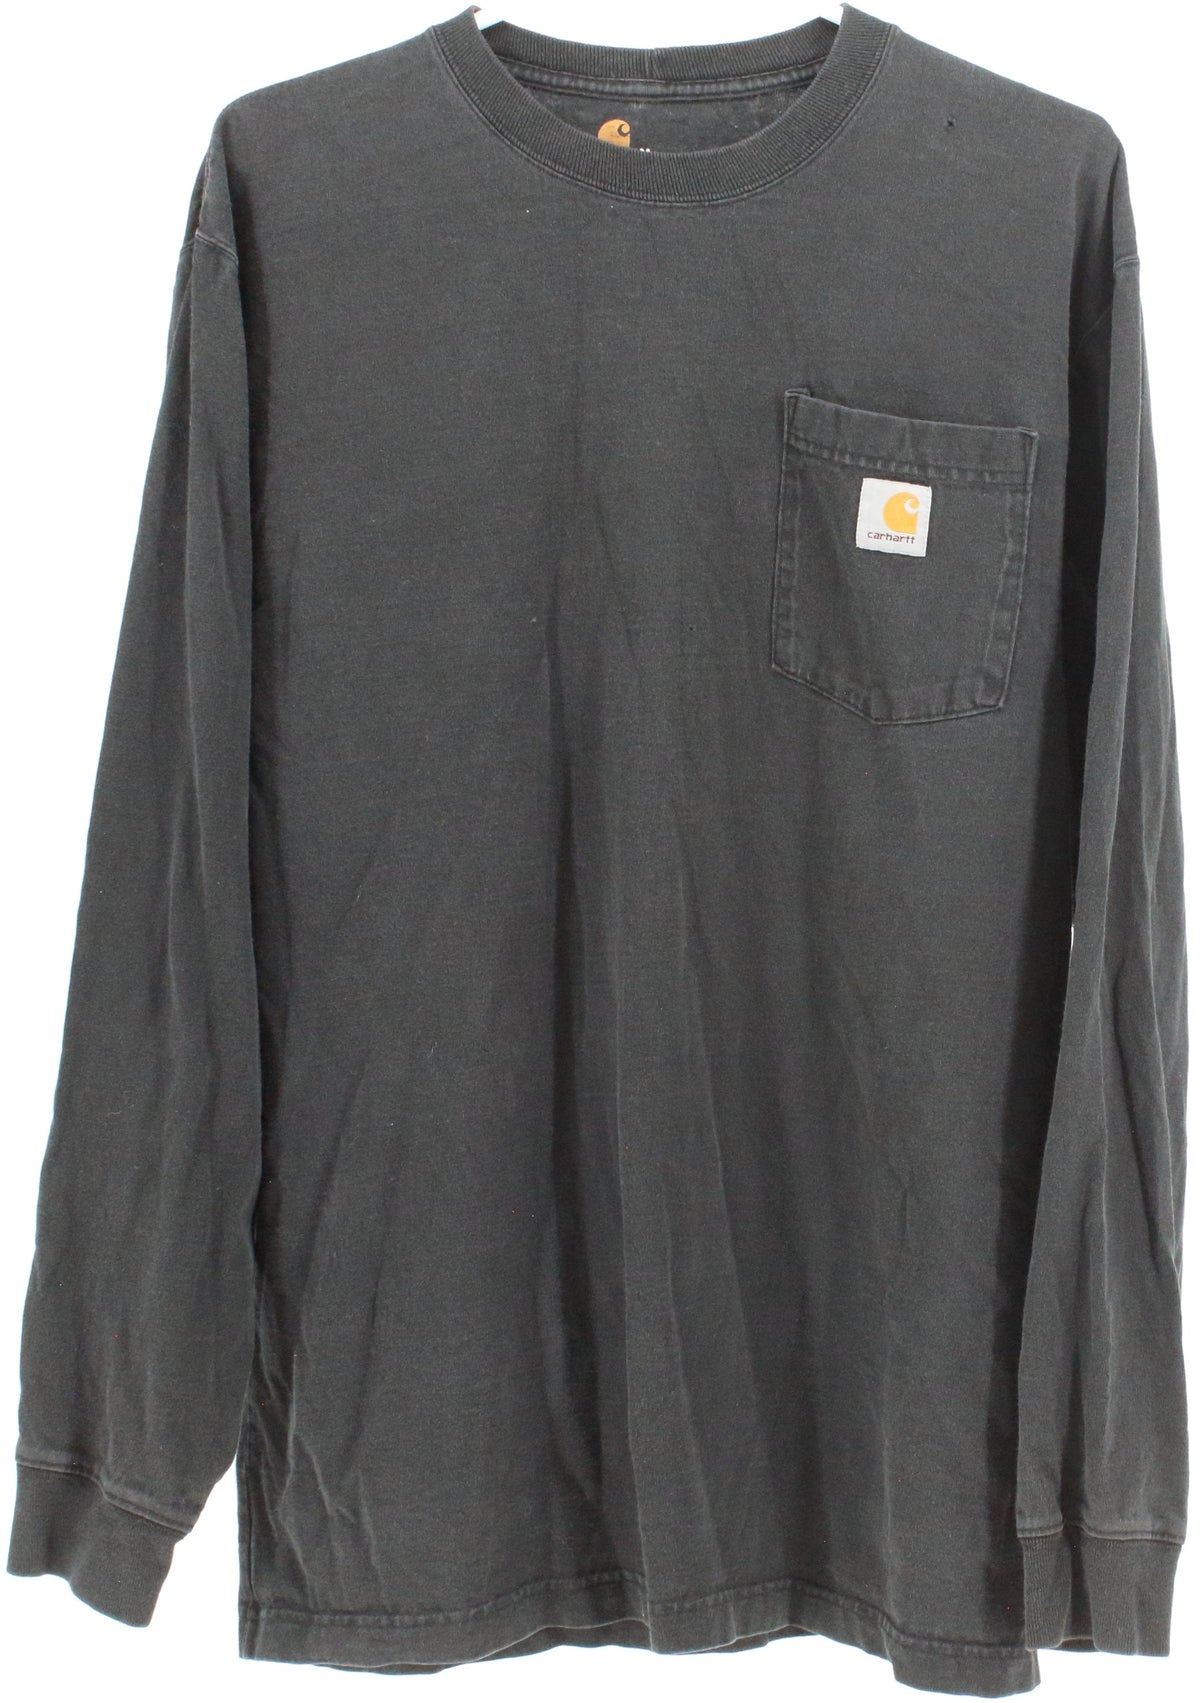 Carhartt Dark Grey Front Pocket Long Sleeve T-Shirt